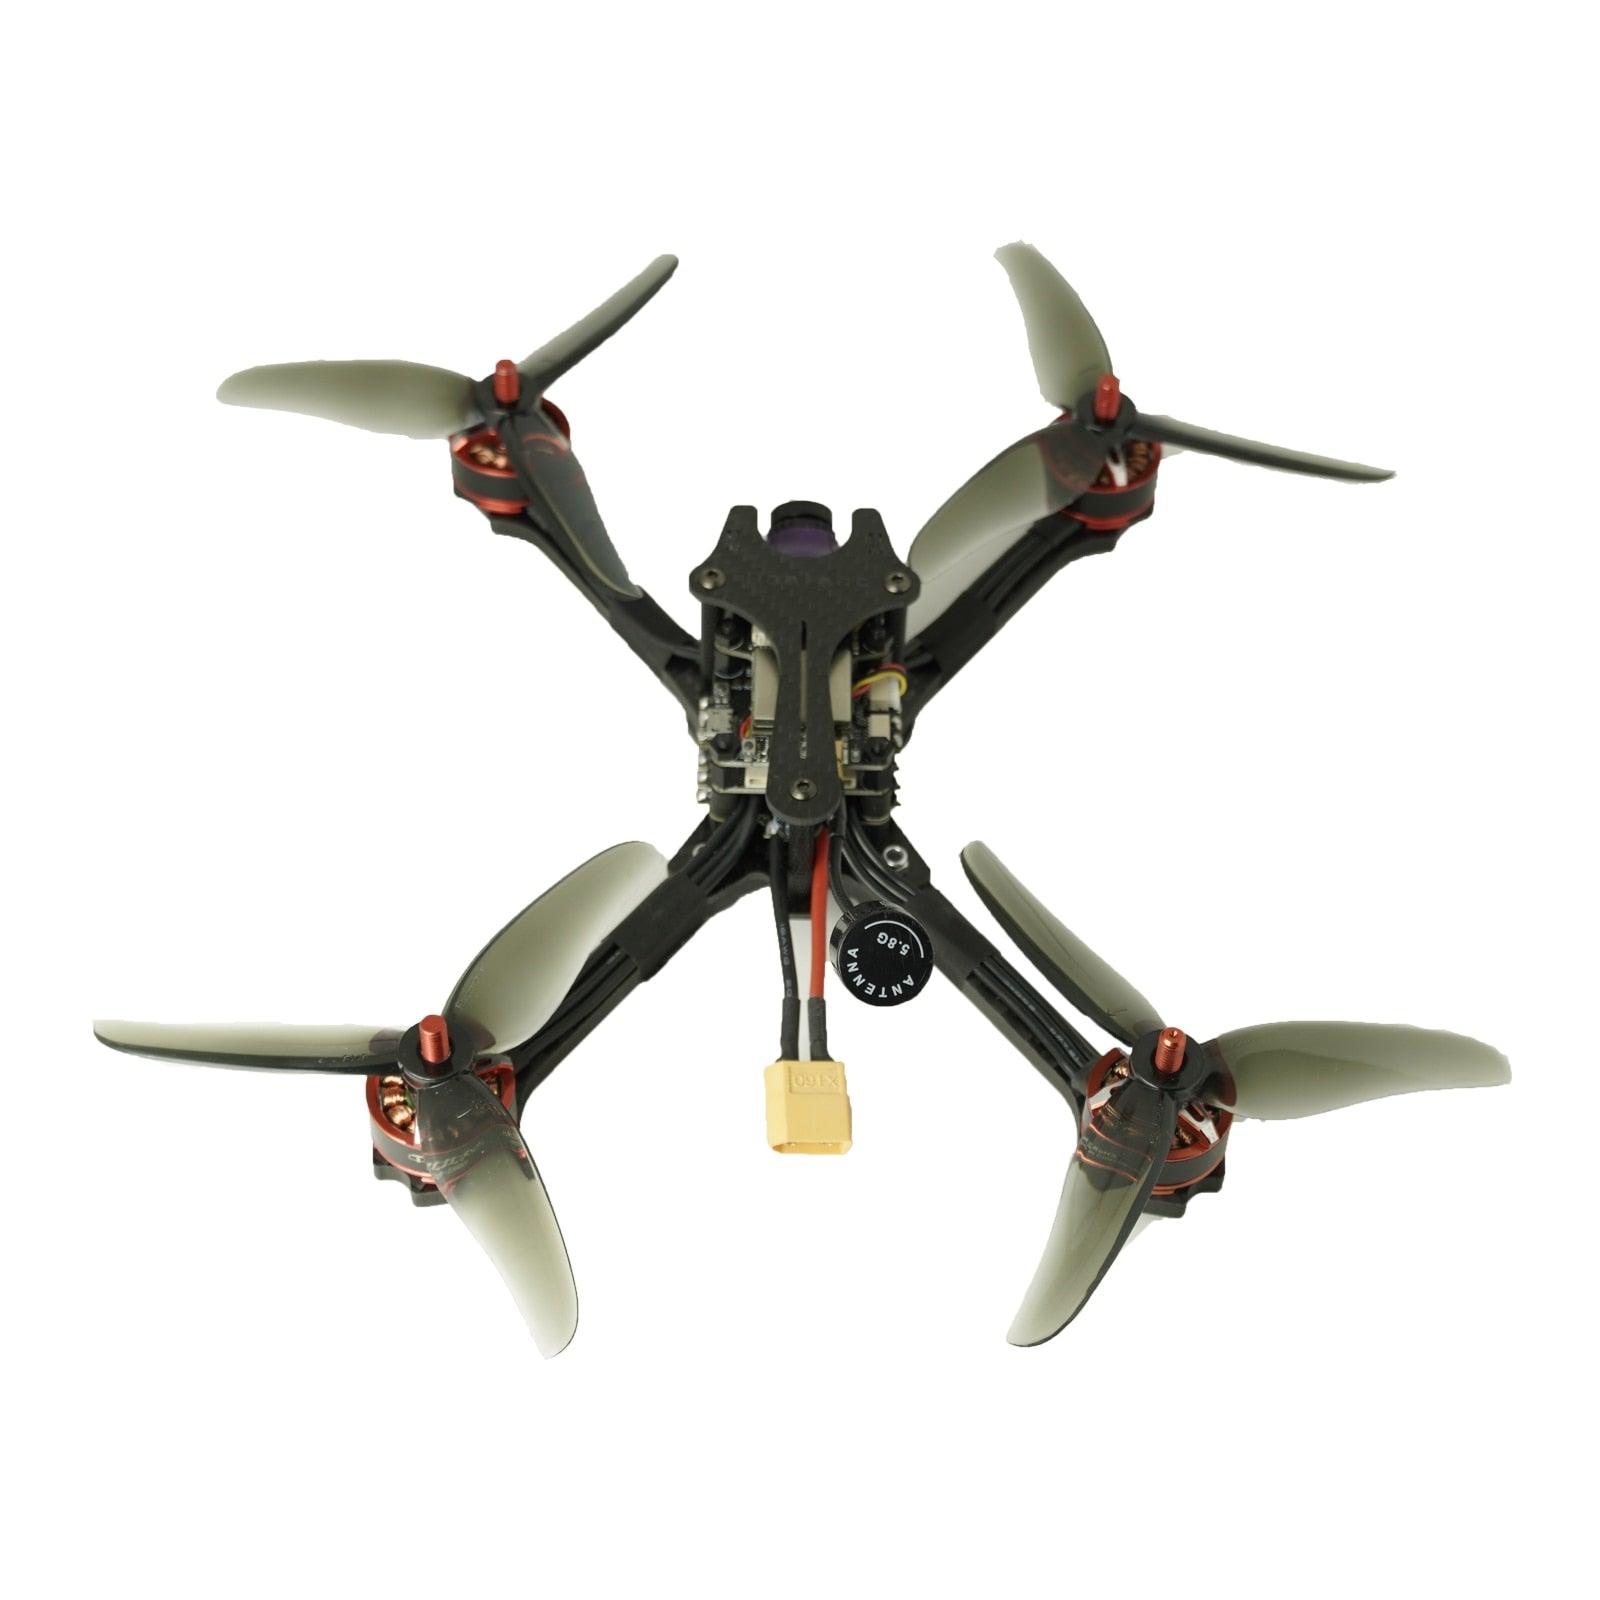 Tcmmrc Fpv Racing Drone Kit, Fpv Freestyle Drones